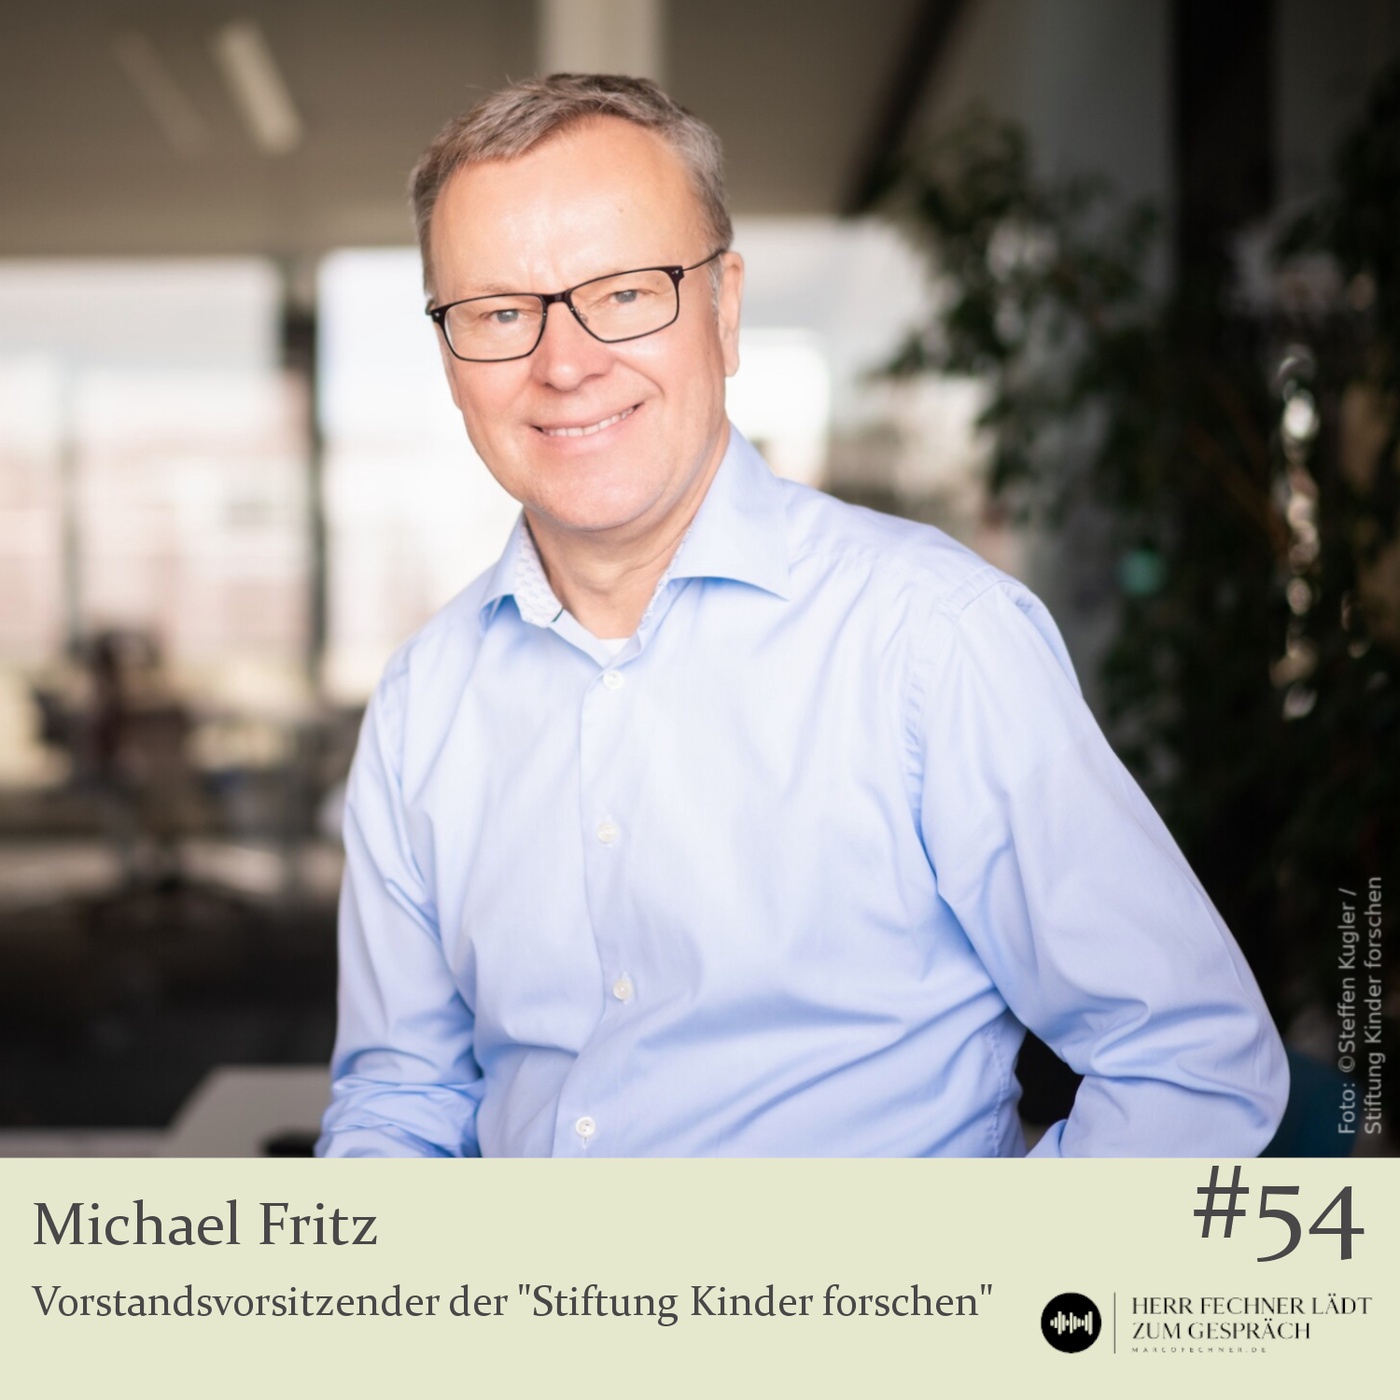 Michael Fritz, 